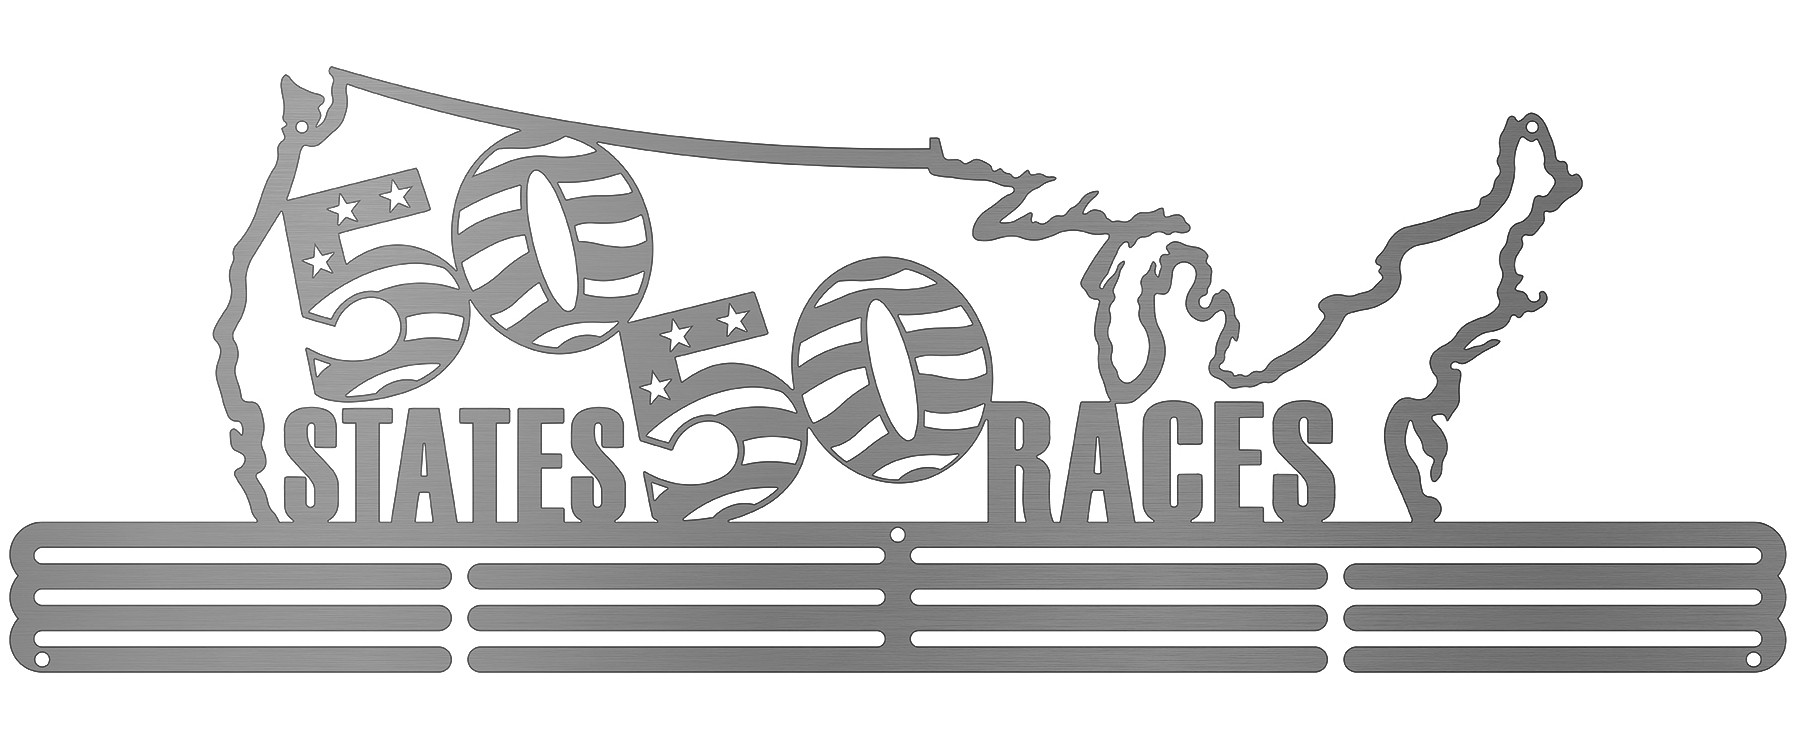 50 States 50 Races